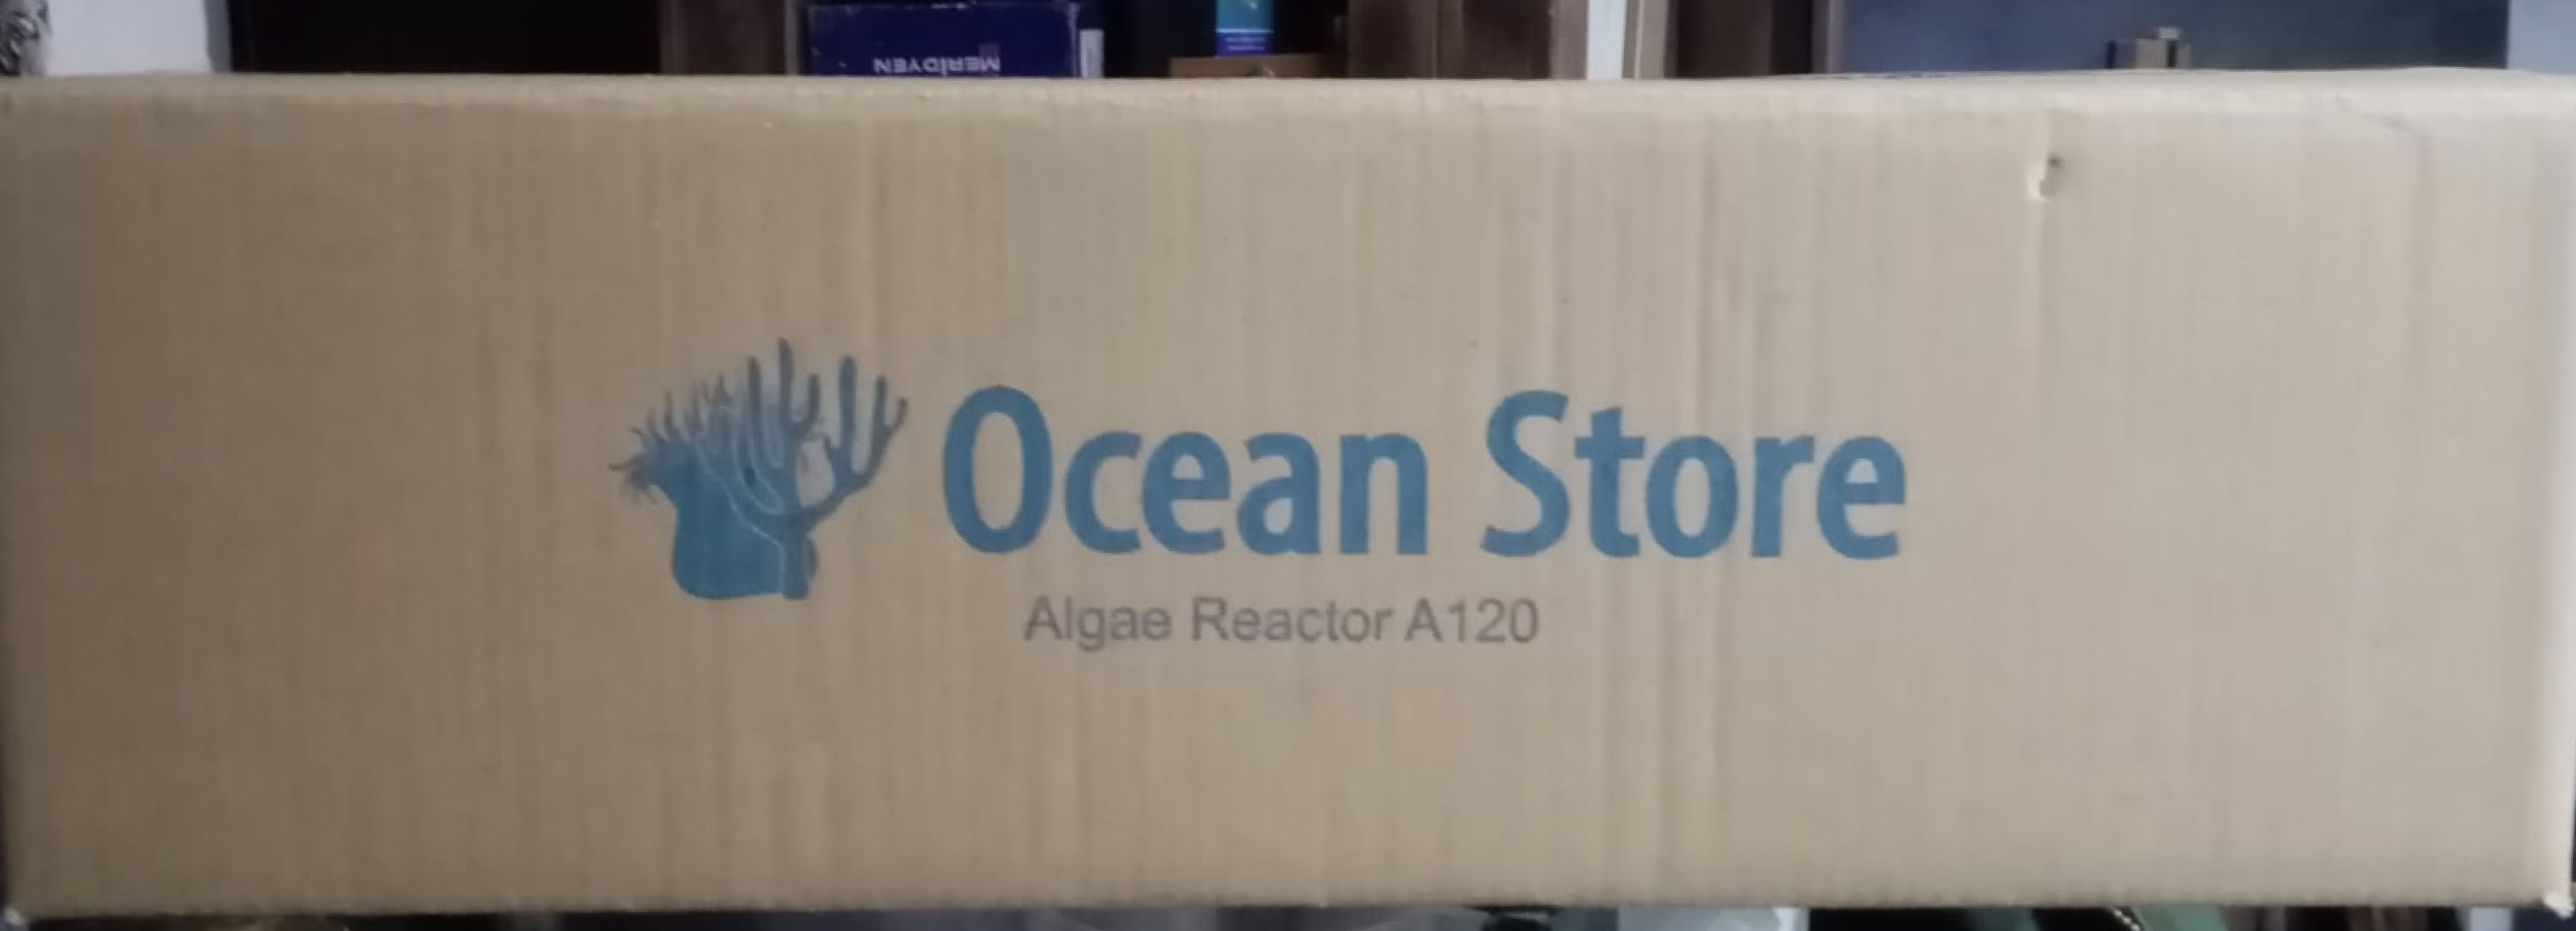 Ocean Store Algae Reactor A120